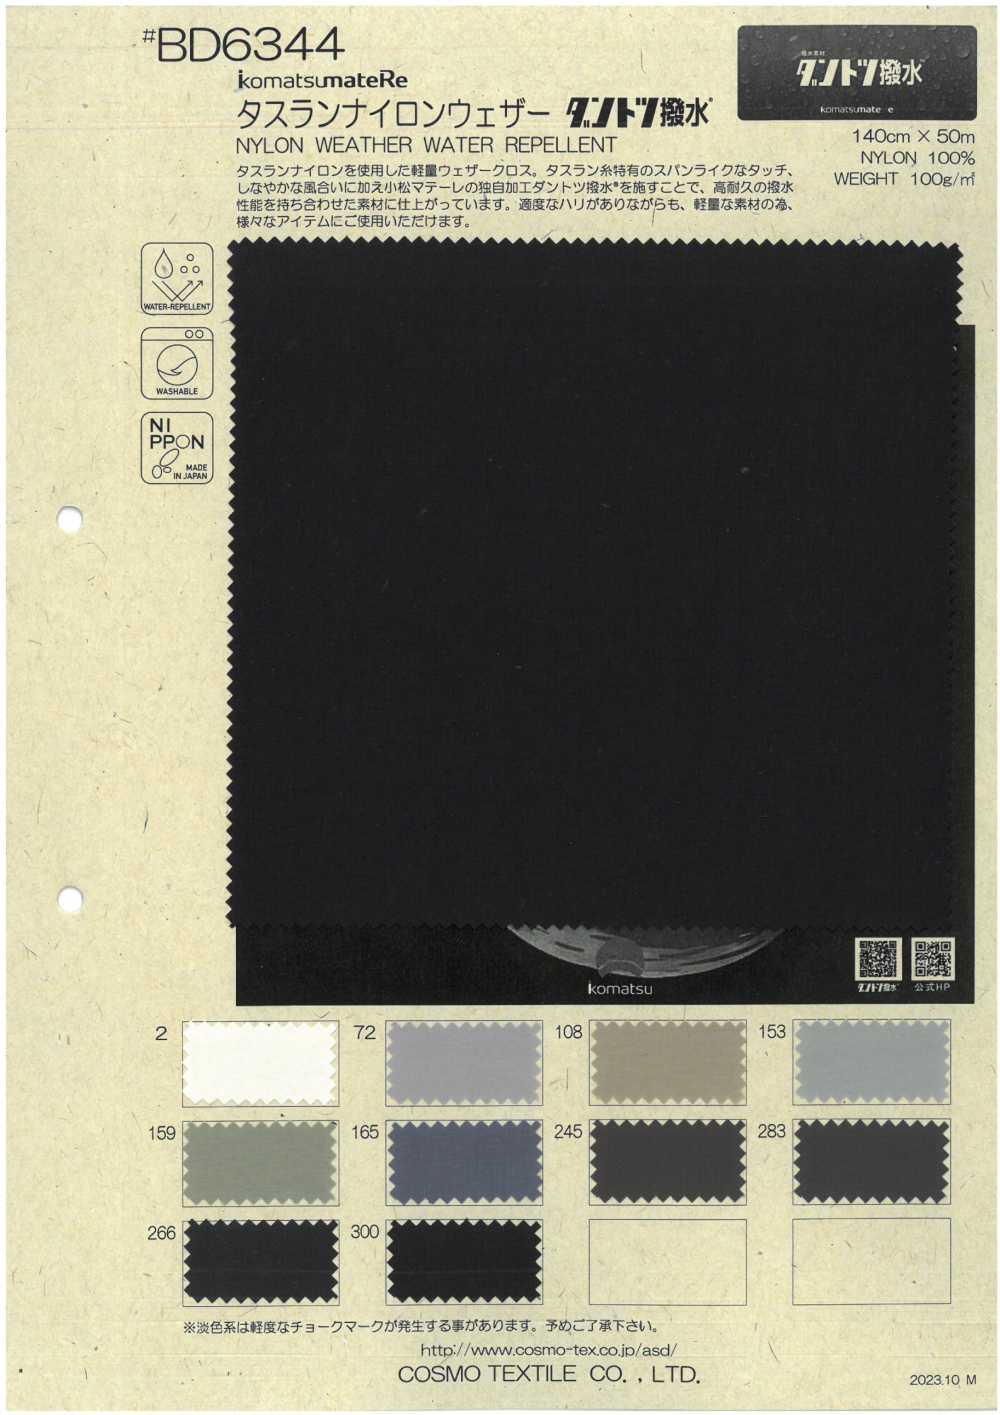 BD6344 Komatsu Matere Taslan Nylon-Wettertuch[Textilgewebe] COSMO TEXTILE